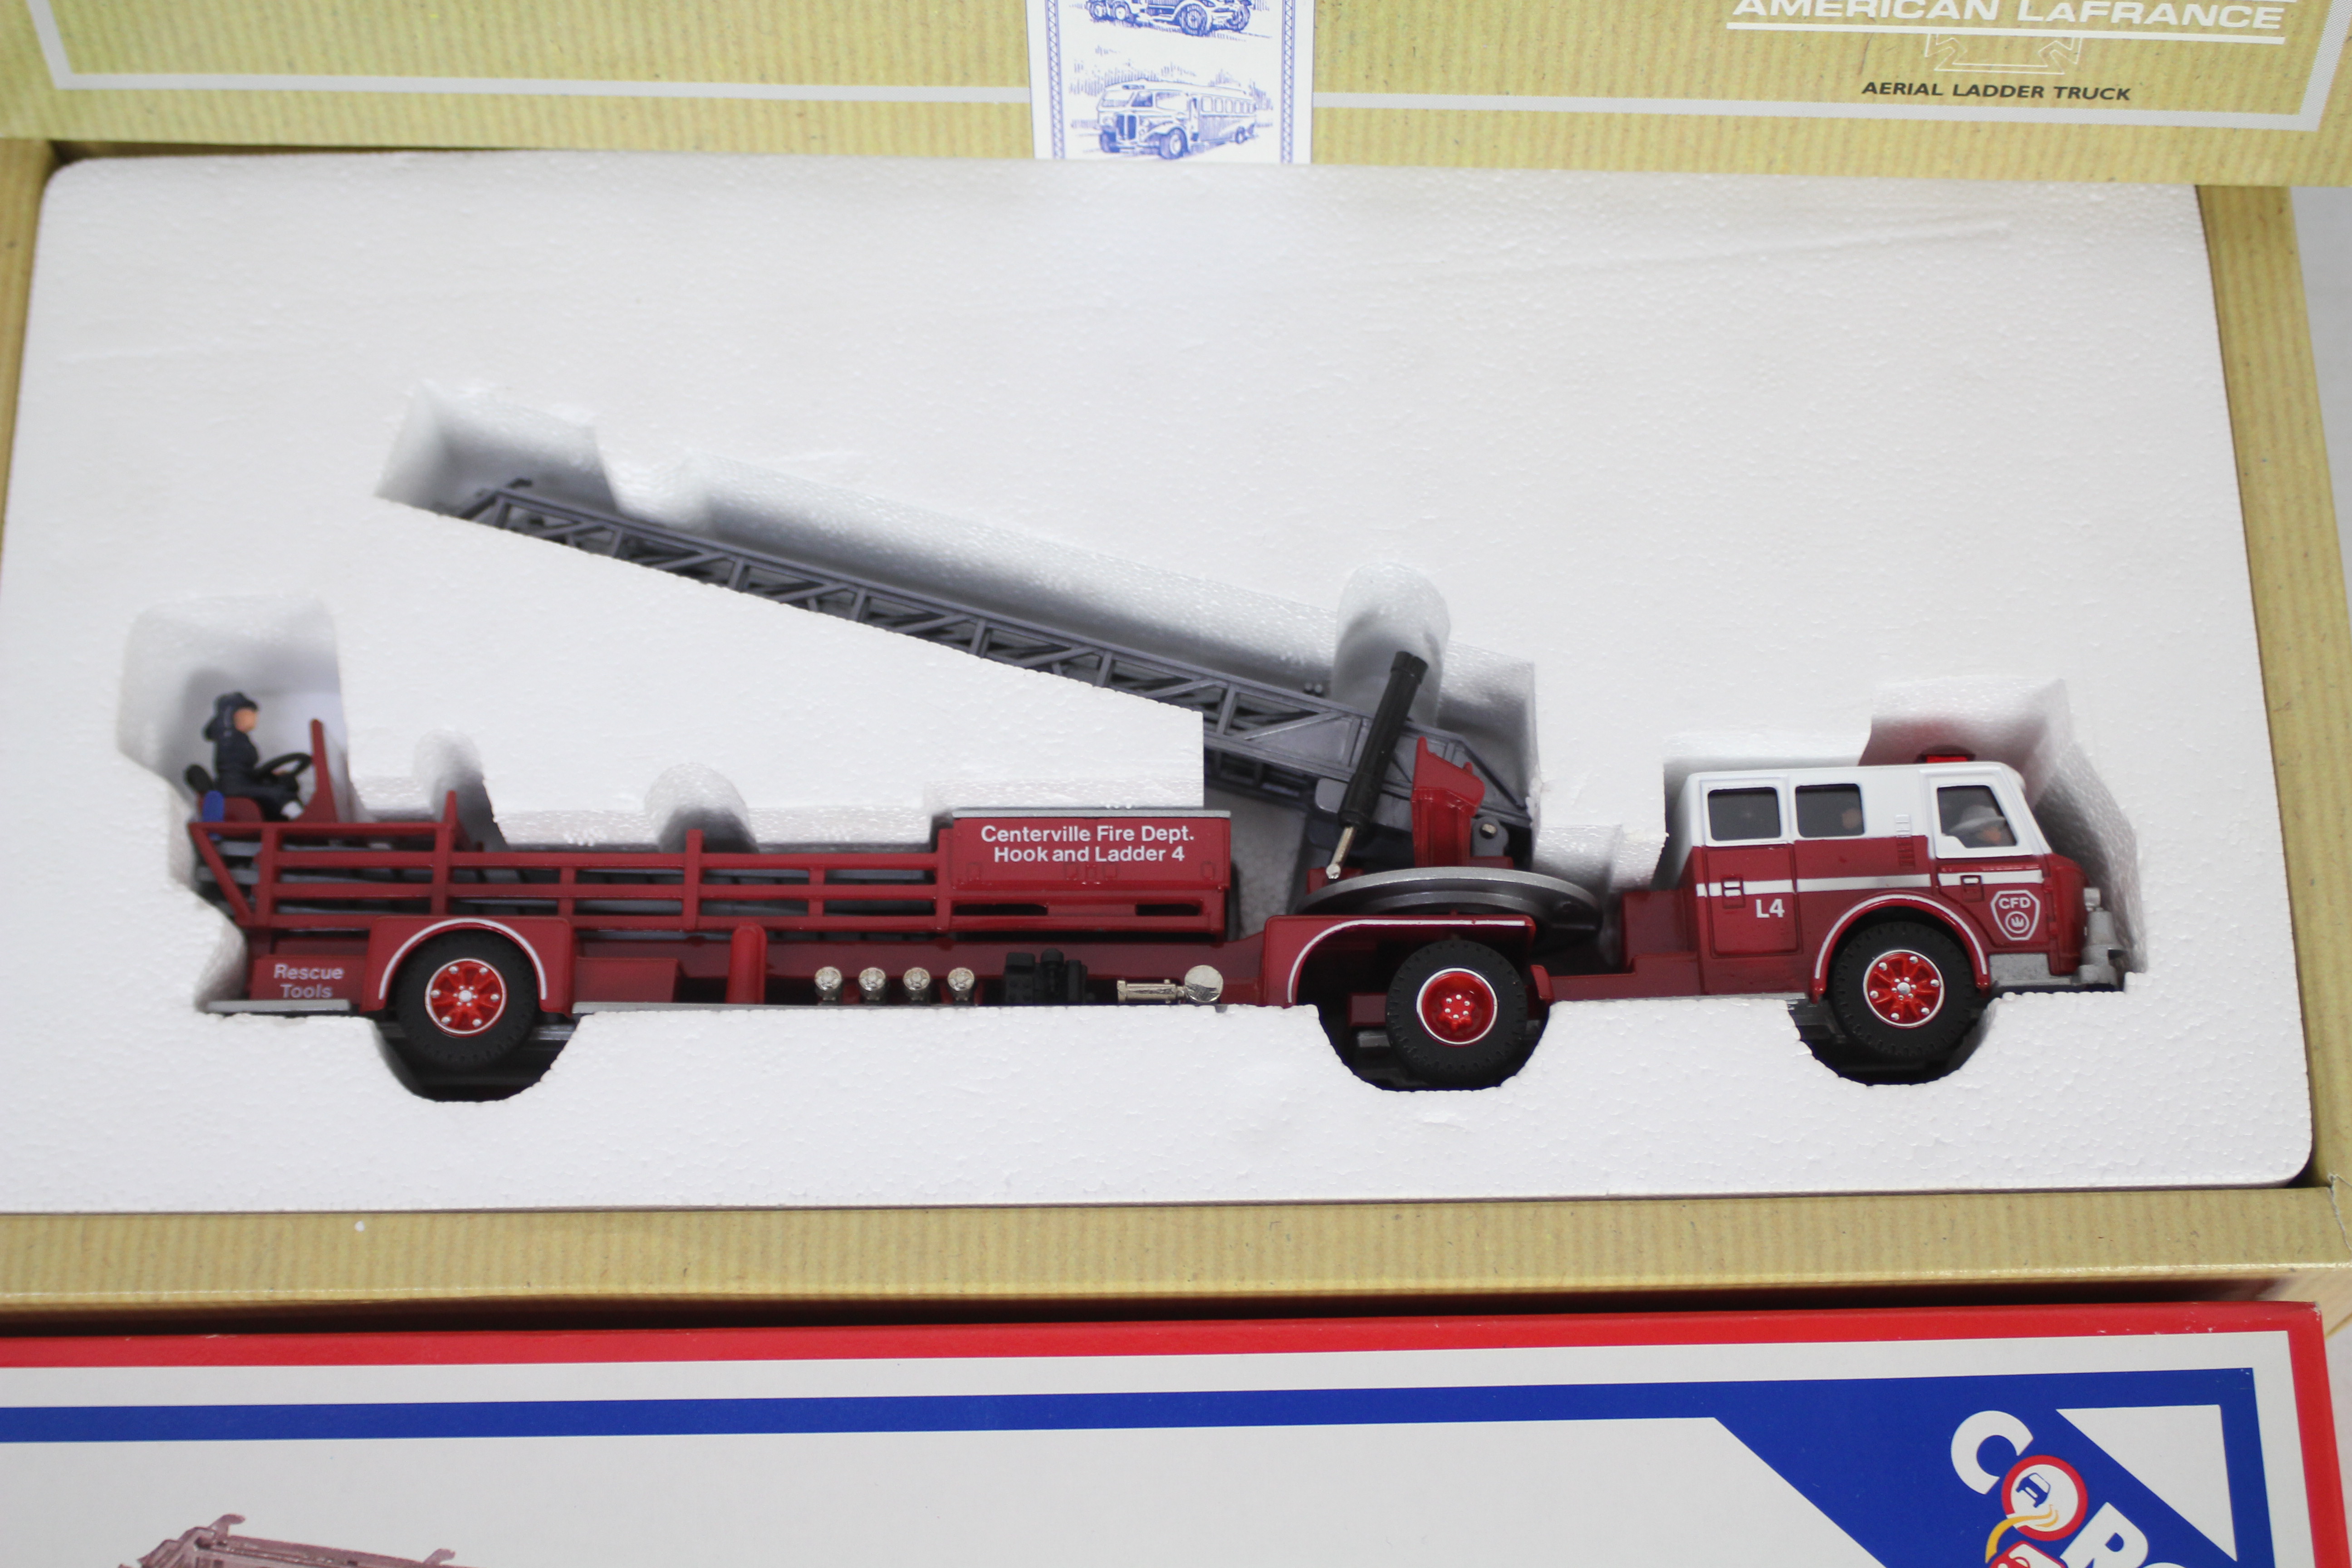 Corgi - Three boxed diecast model American LaFrance Aerial Ladder Fire Trucks from Corgi. - Image 4 of 4